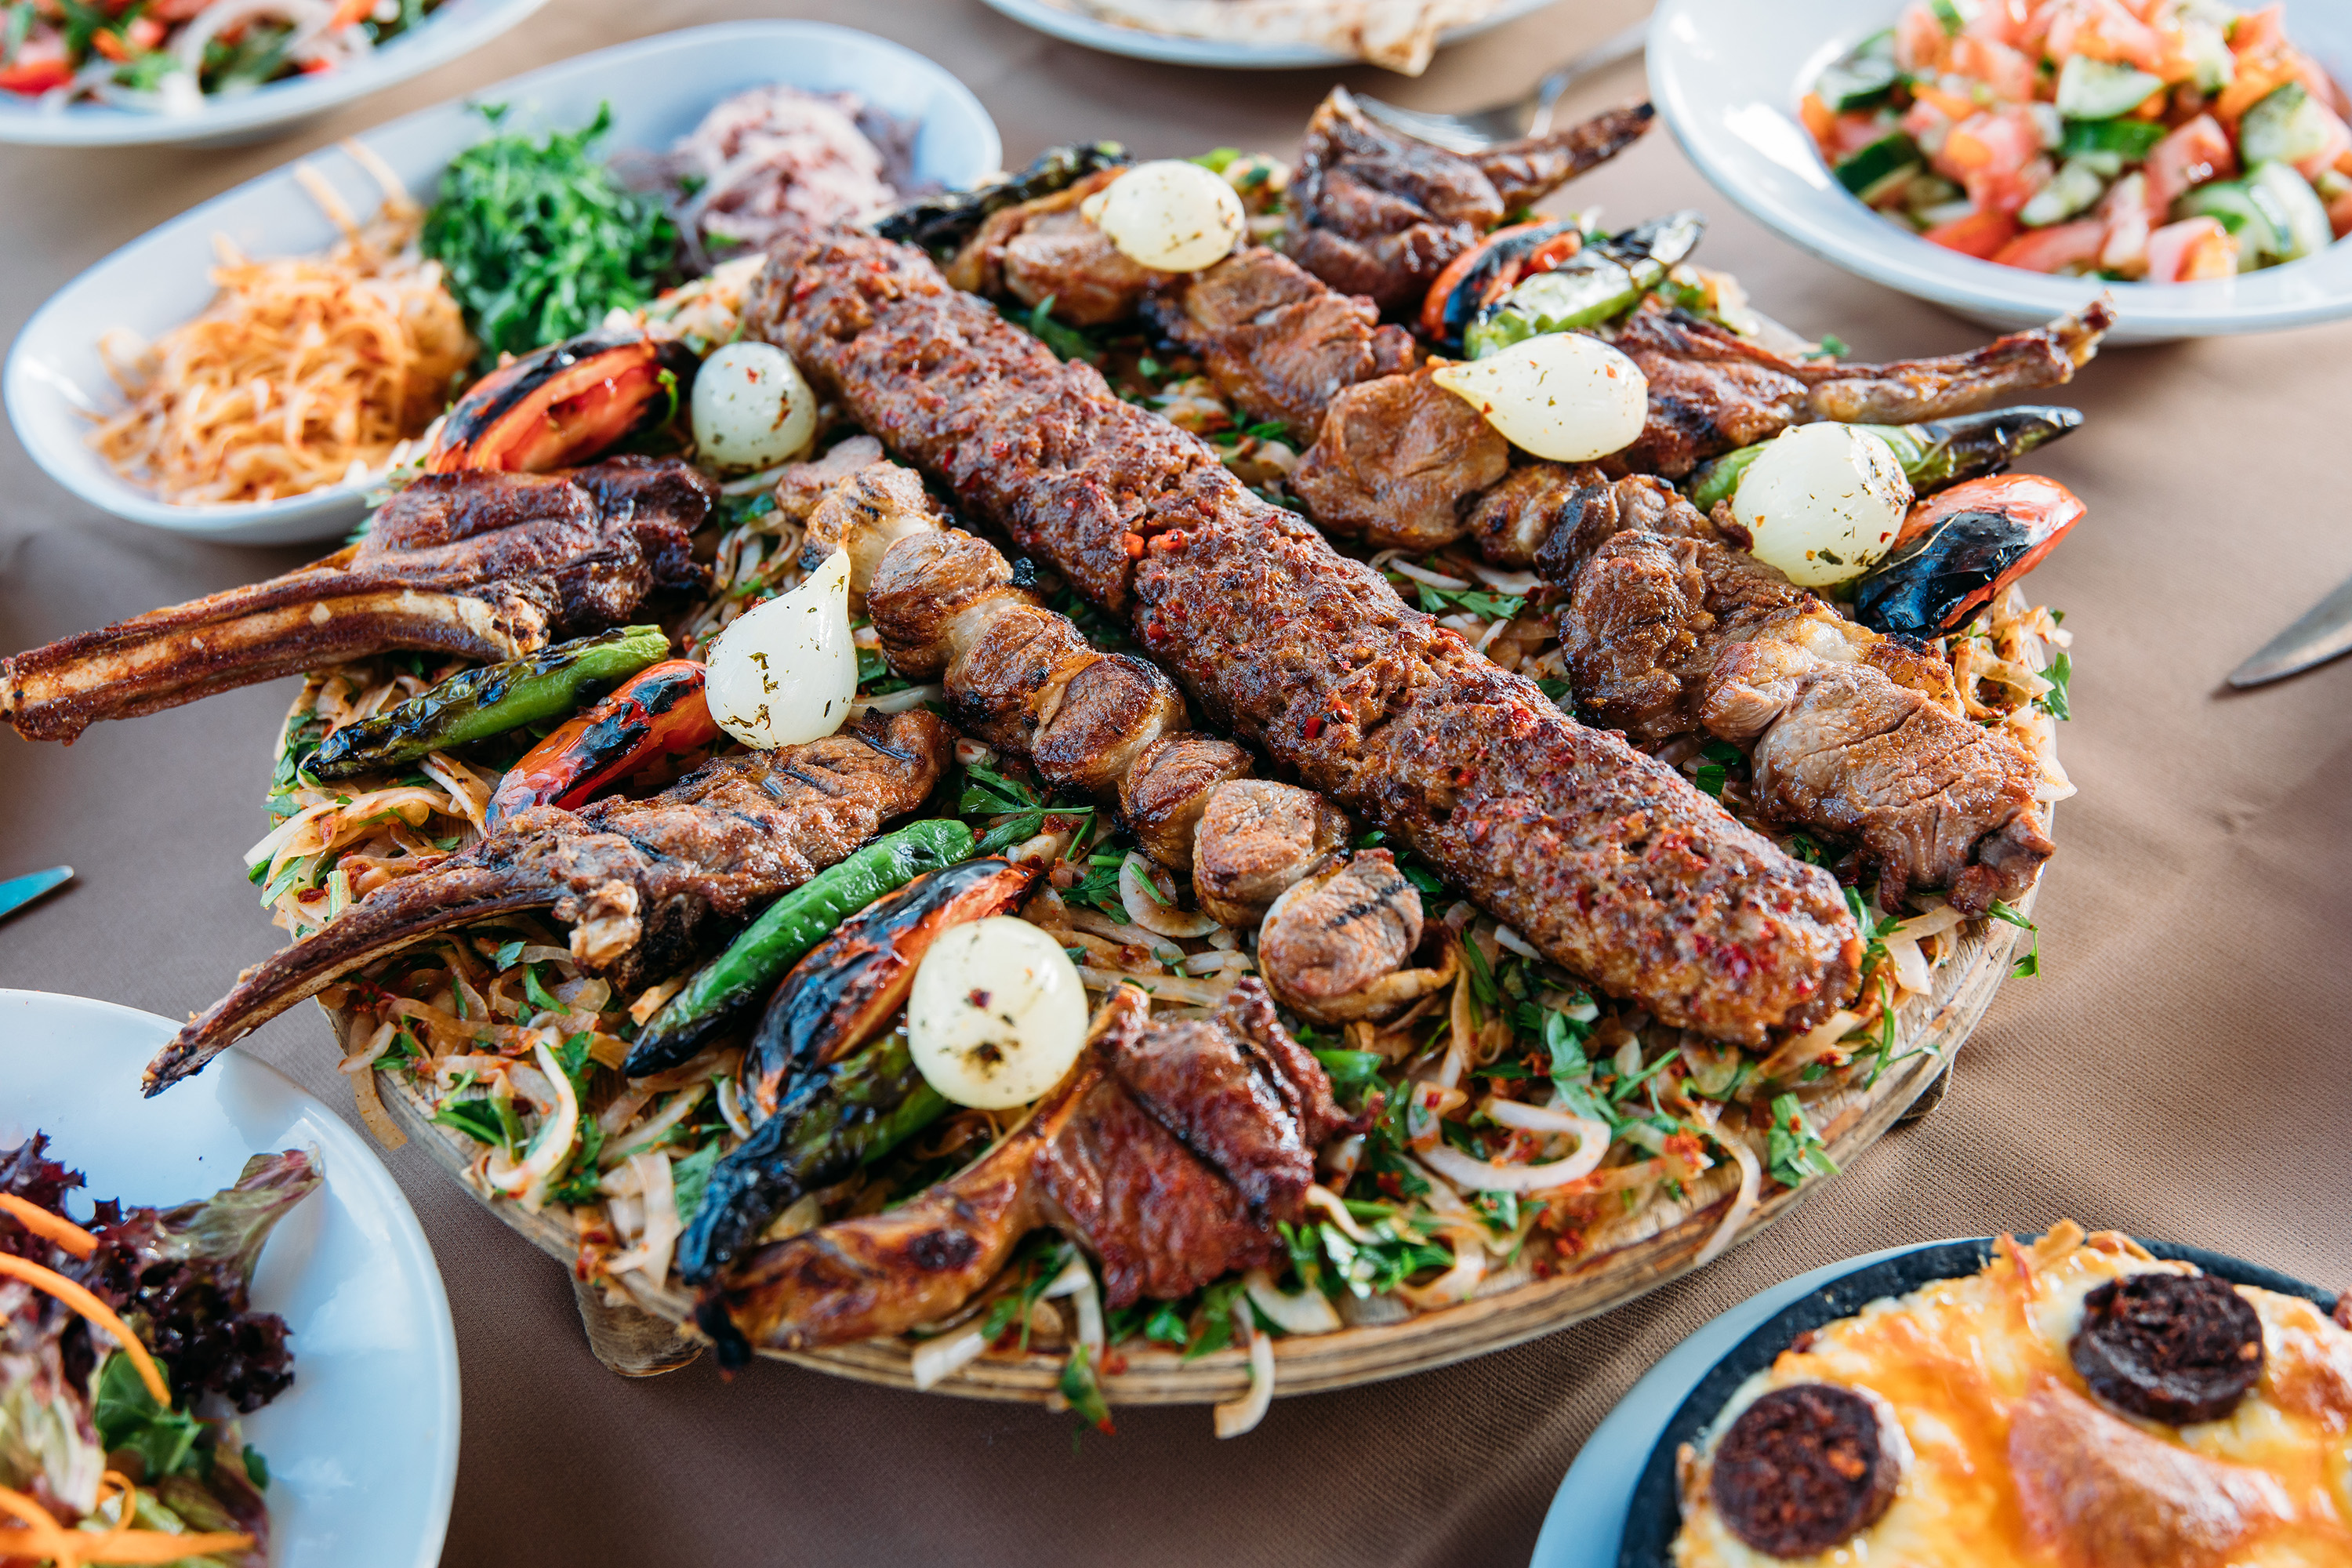 Where to Eat the Best Adana Kebap in the World? | TasteAtlas